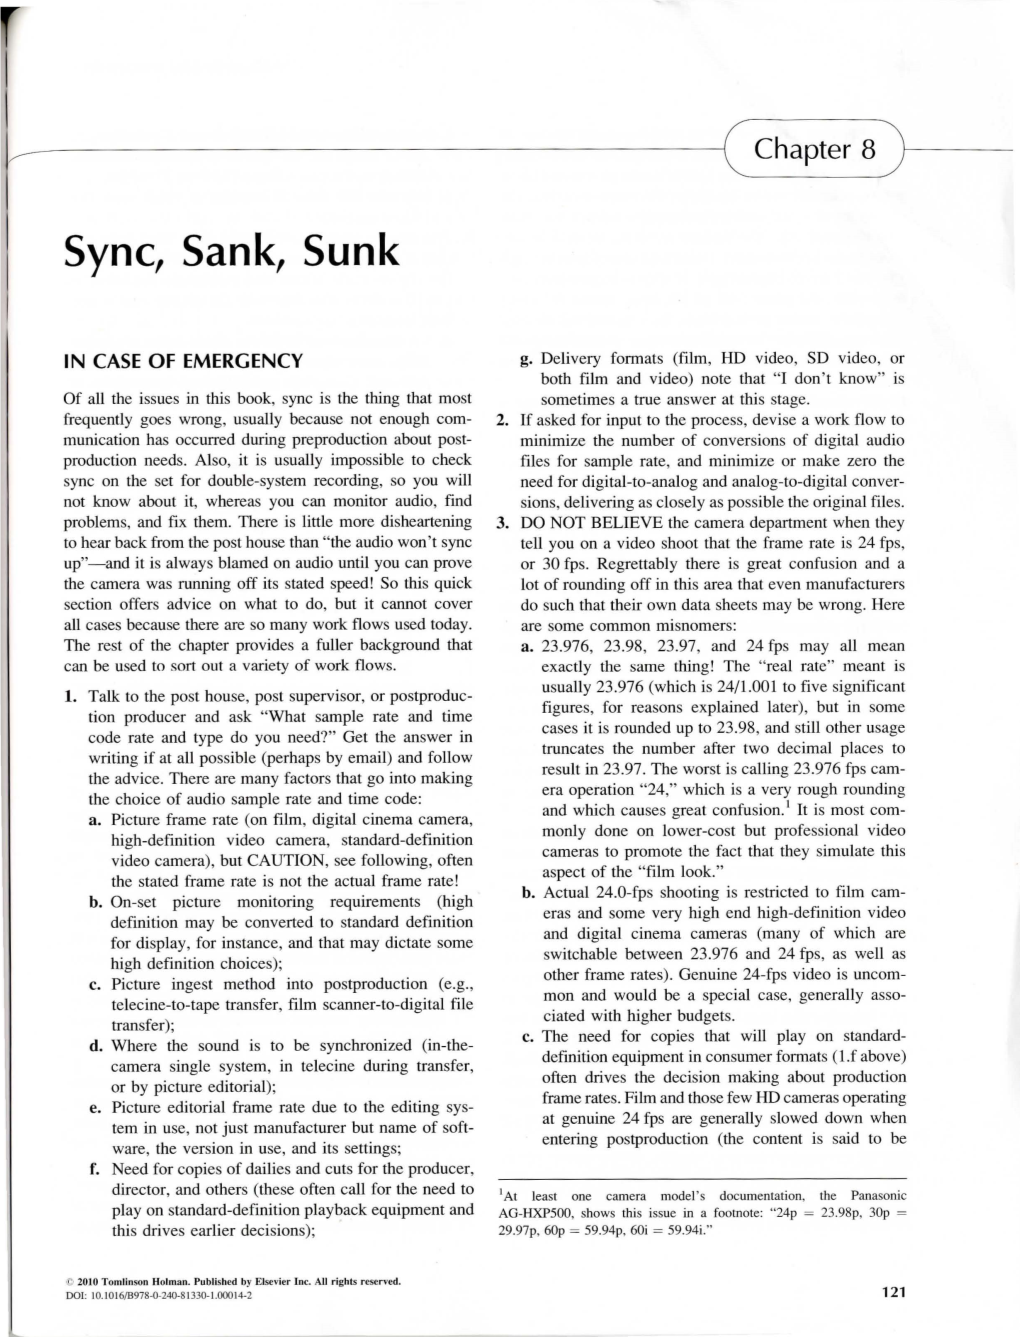 Sync, Sank, Sunk